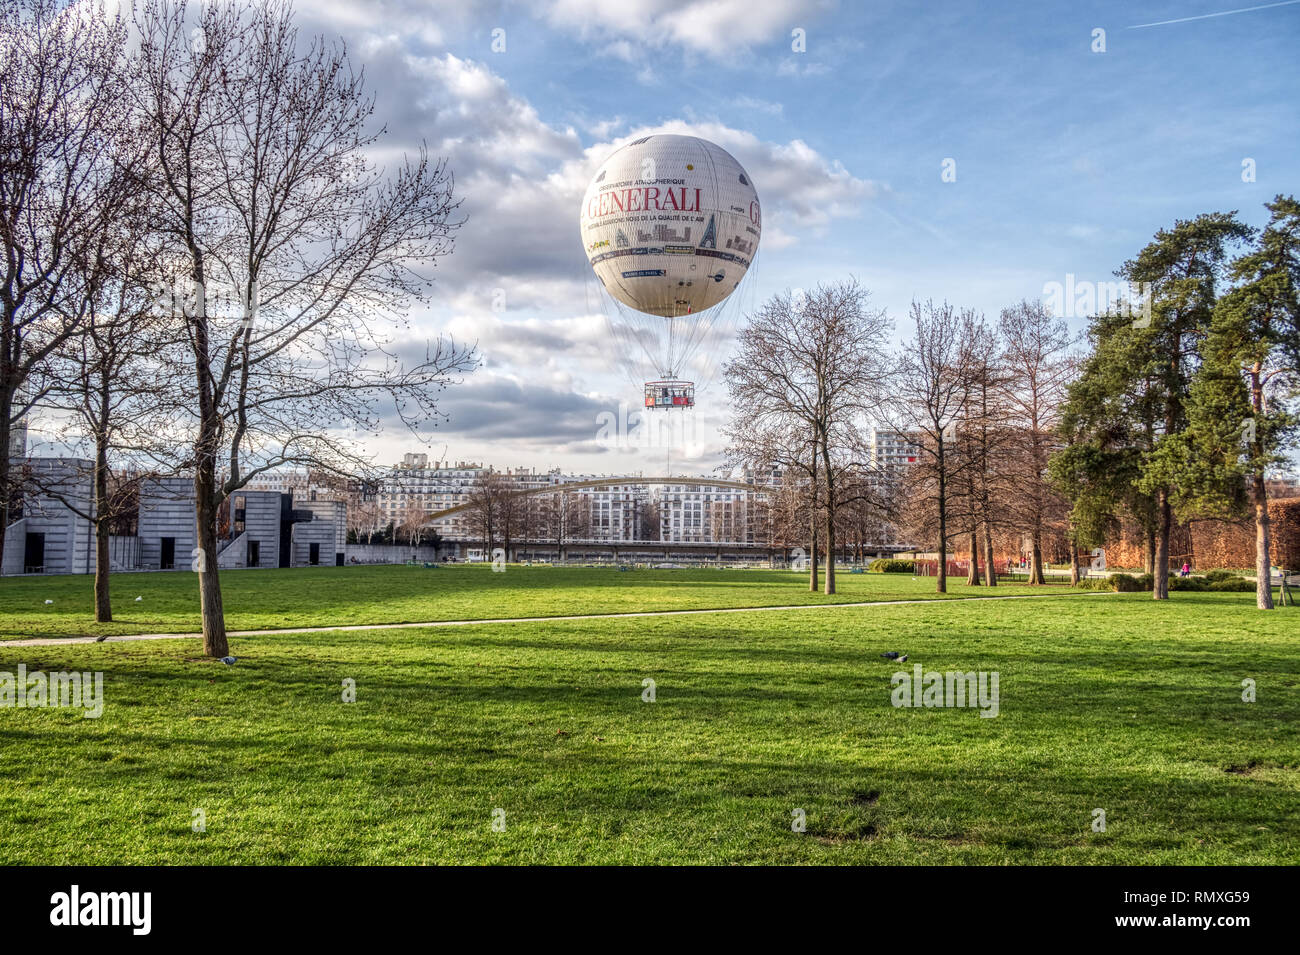 Balloon in Parc Andre Citroen - Paris, France Stock Photo